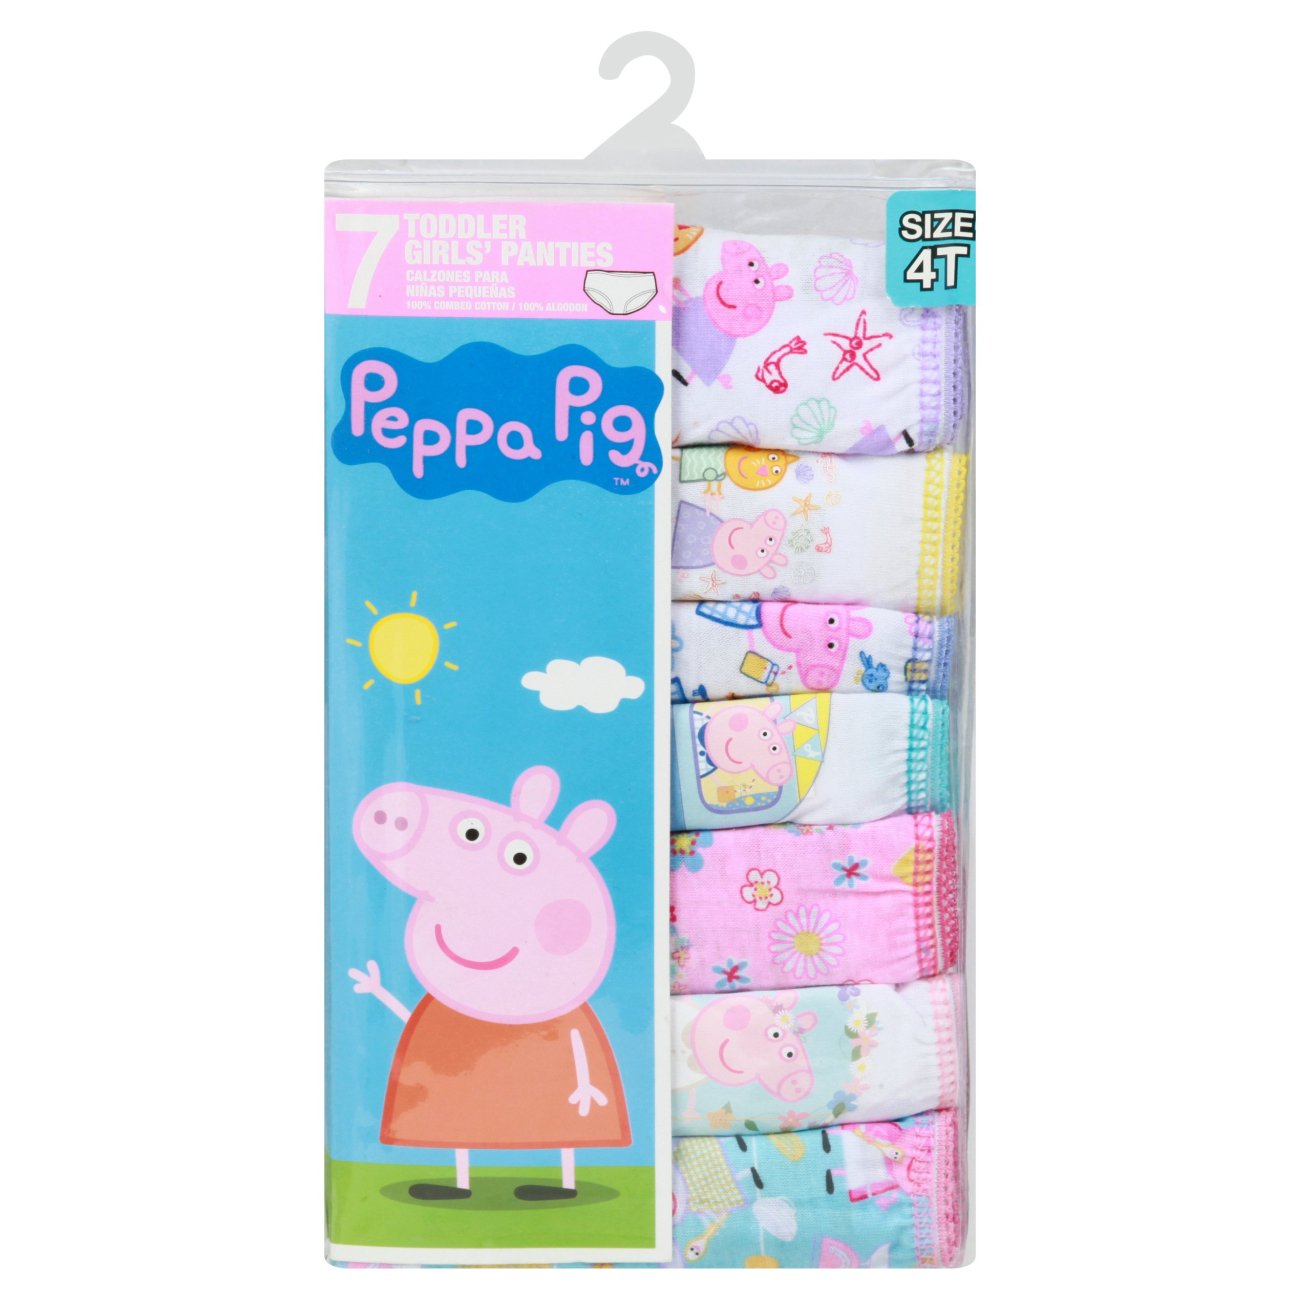 Peppa Pig Knickers 5 Pack Kids Girls 18 24 Months 2-7 Years